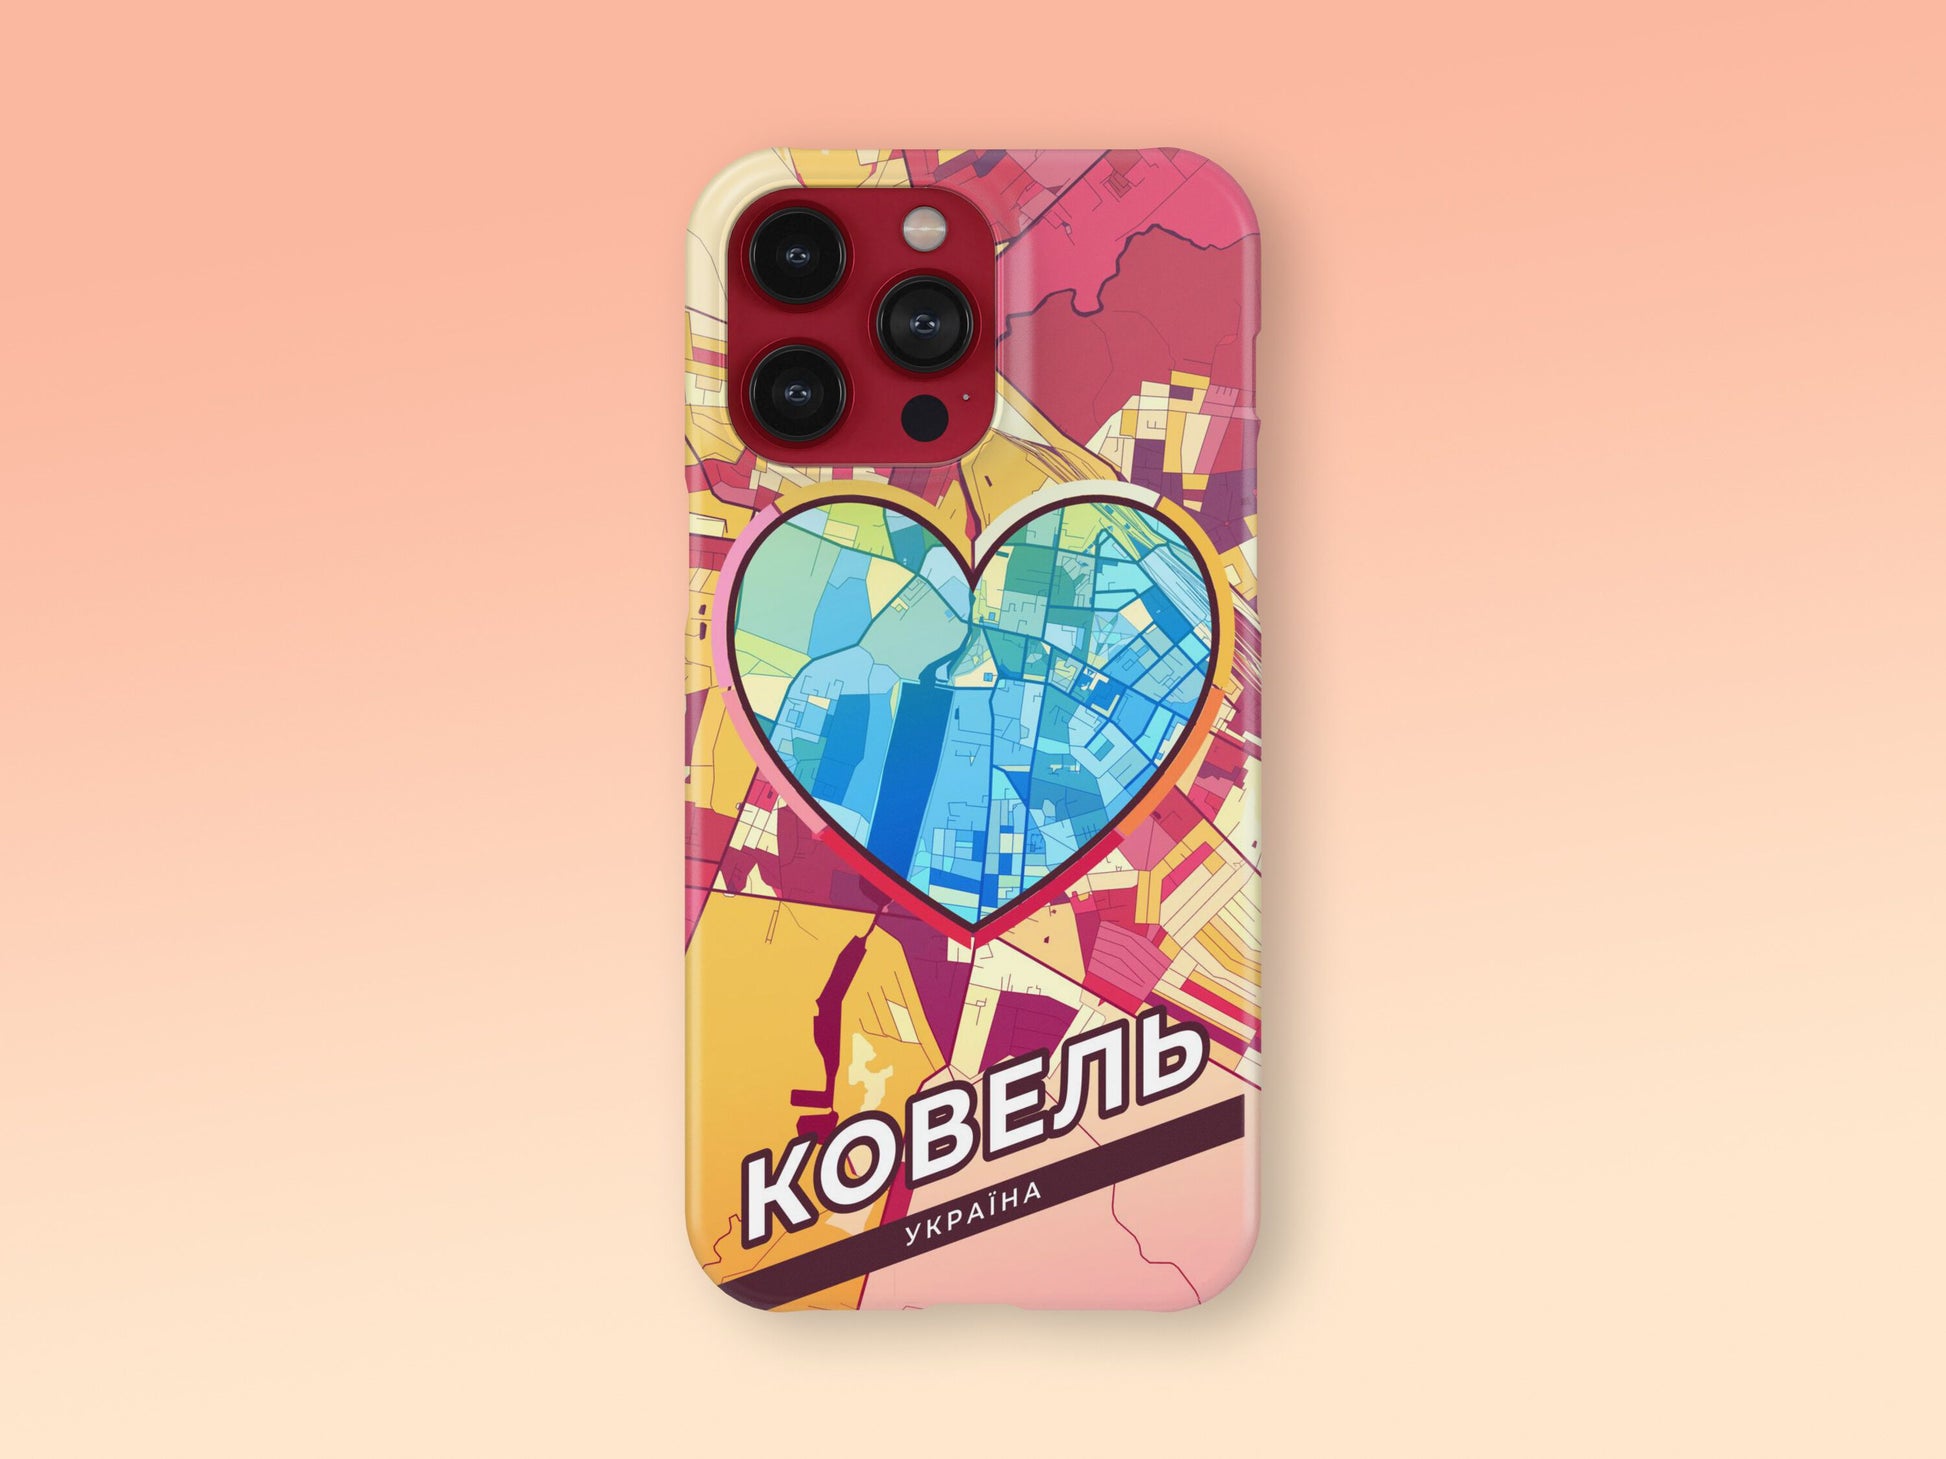 Kovel Ukraine slim phone case with colorful icon. Birthday, wedding or housewarming gift. Couple match cases. 2